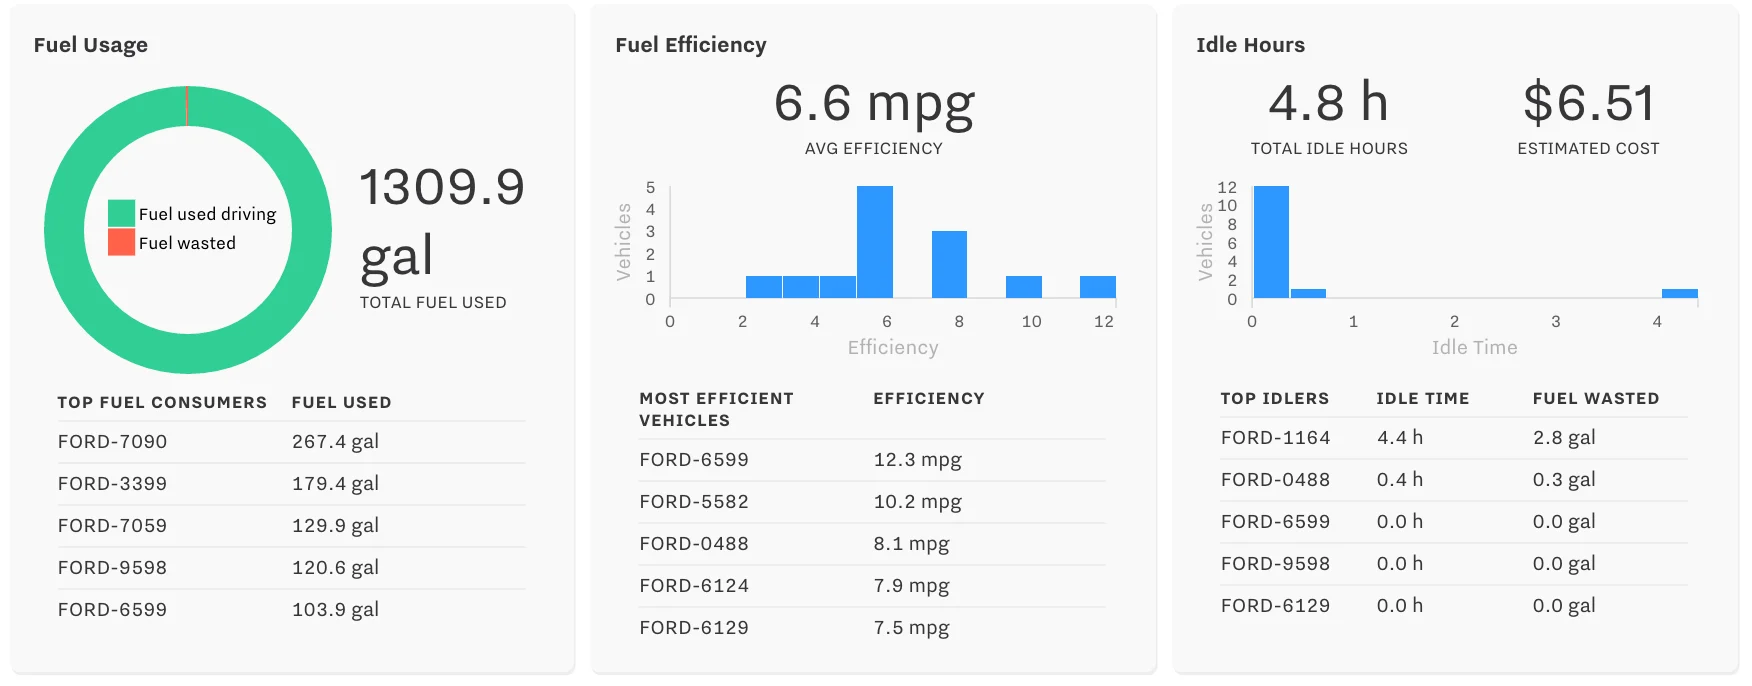 Fleet Summary Report charts fuel efficiency